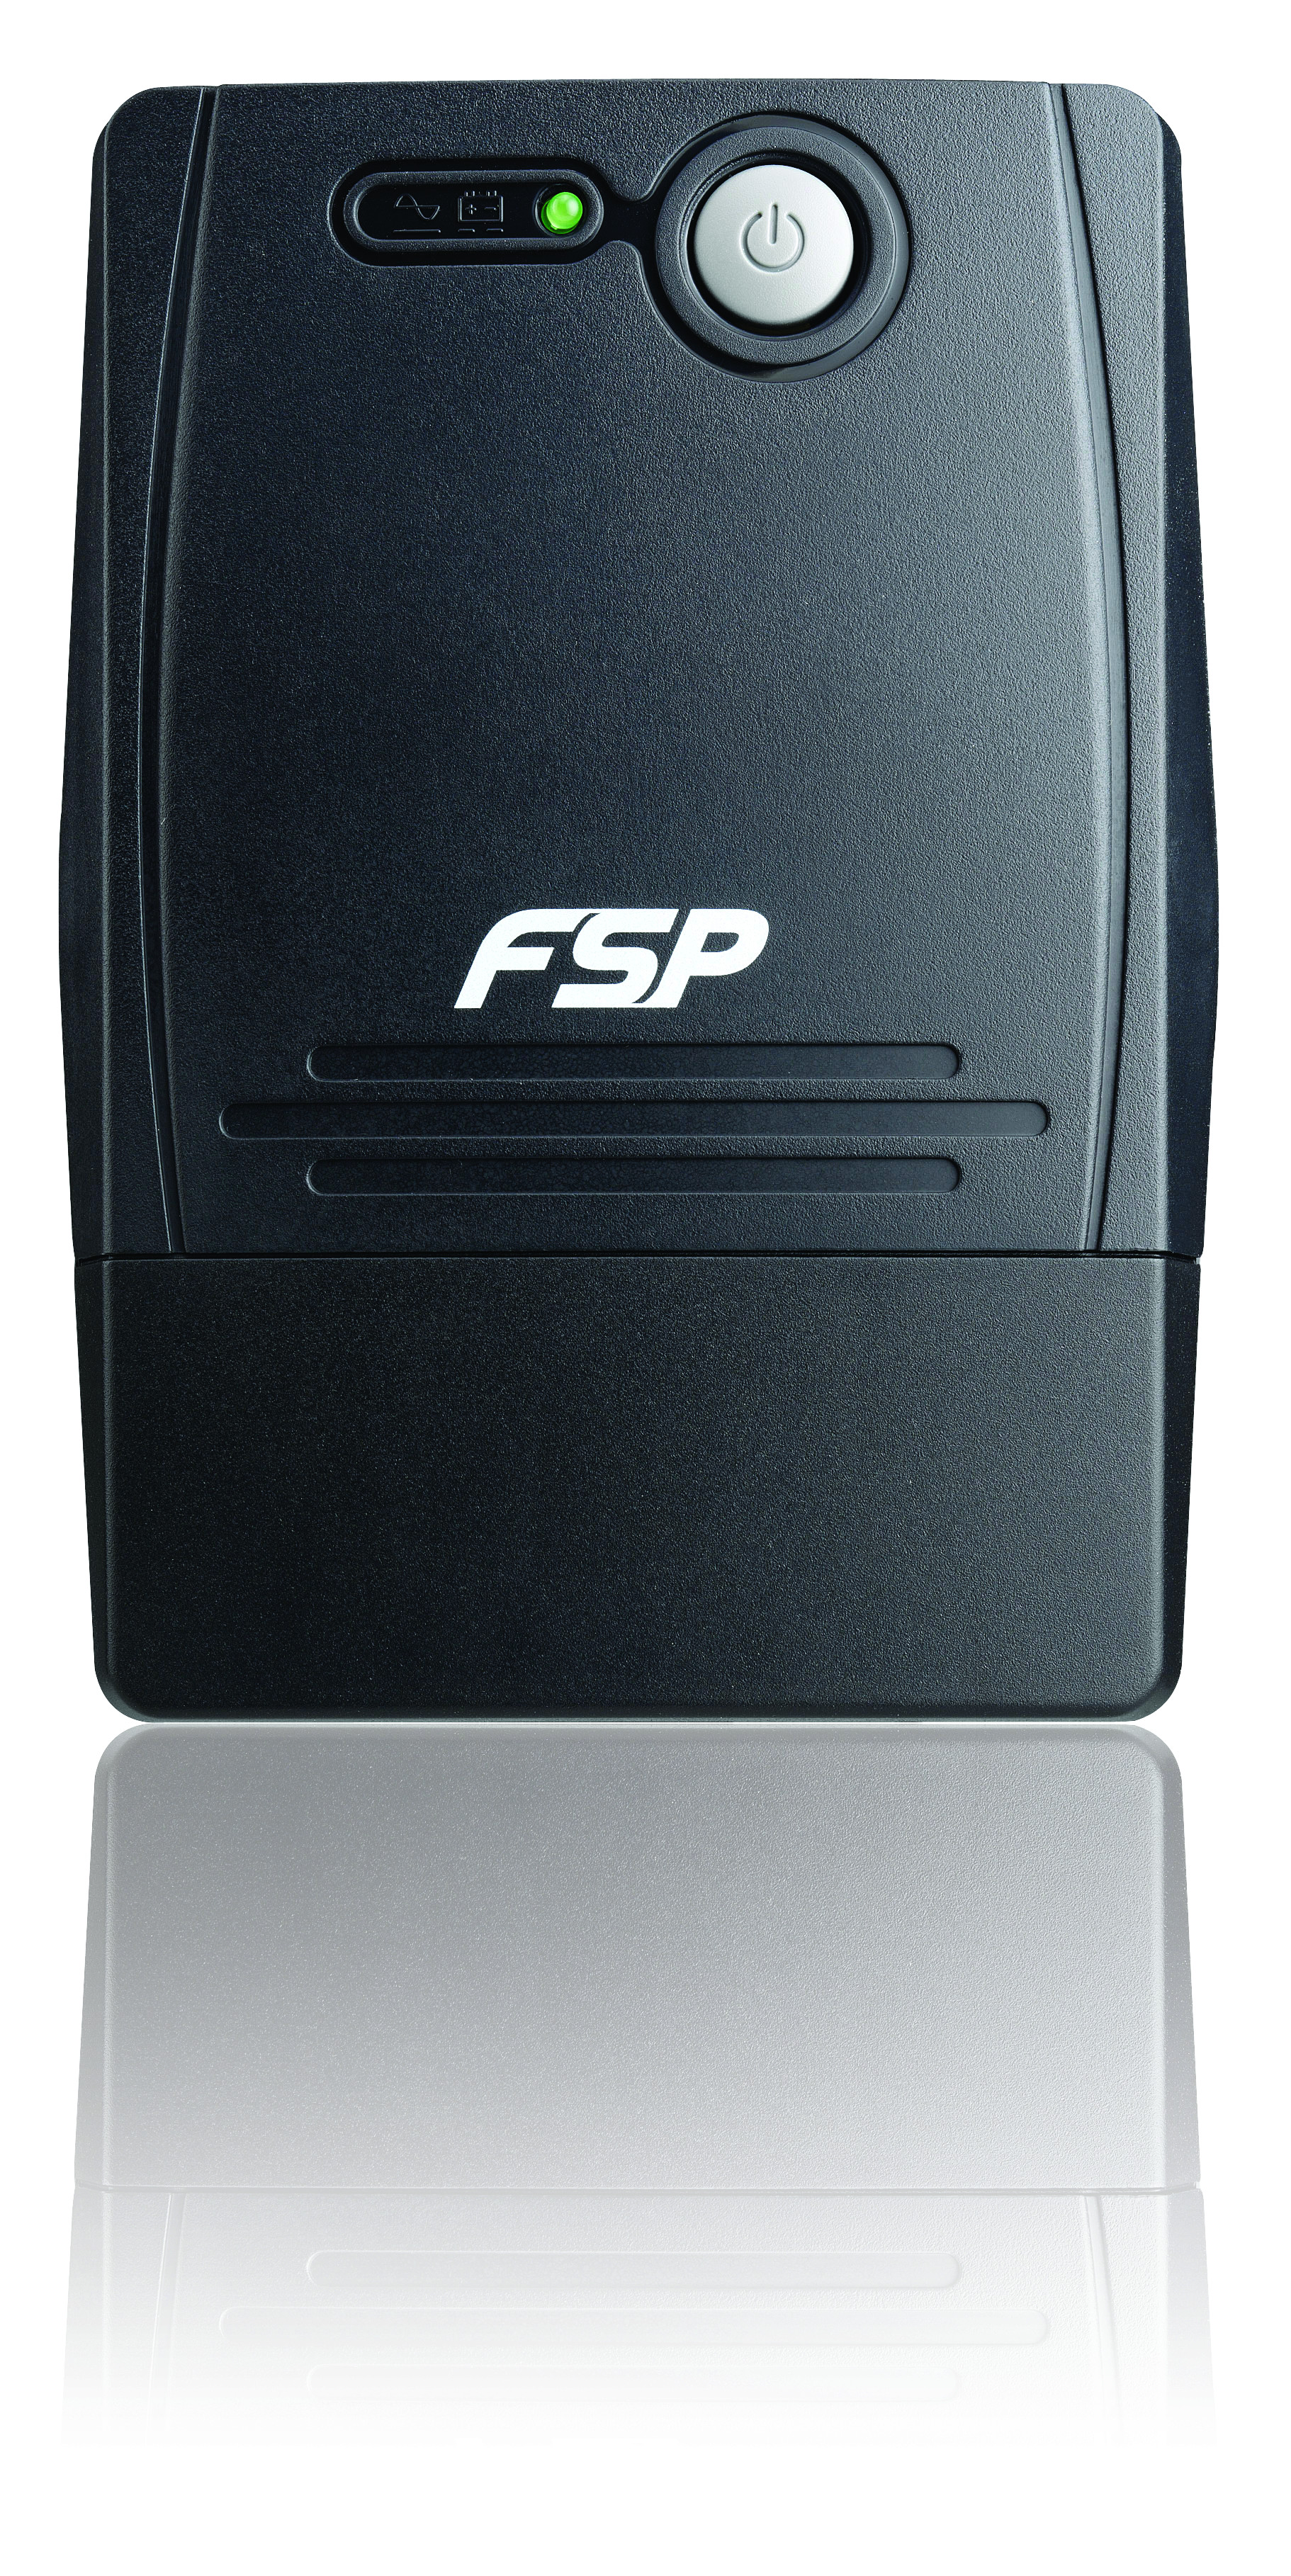 FSP UPS FP 800, 800 VA / 480 W, line interactive 